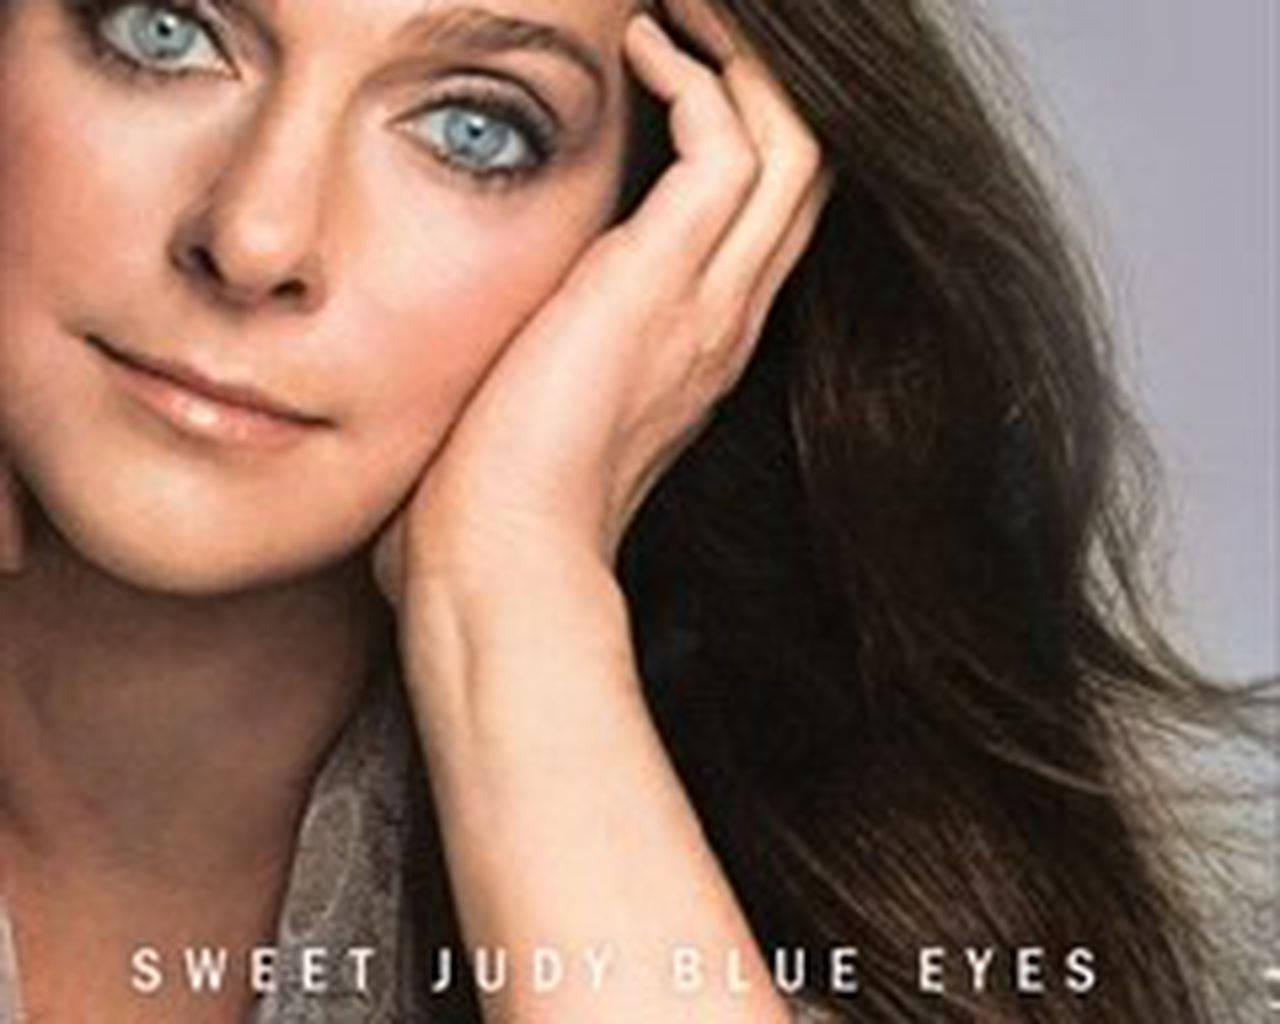 Sød Judy Blue Eyes Mit Liv I Musik Af Judy Collins Wallpaper